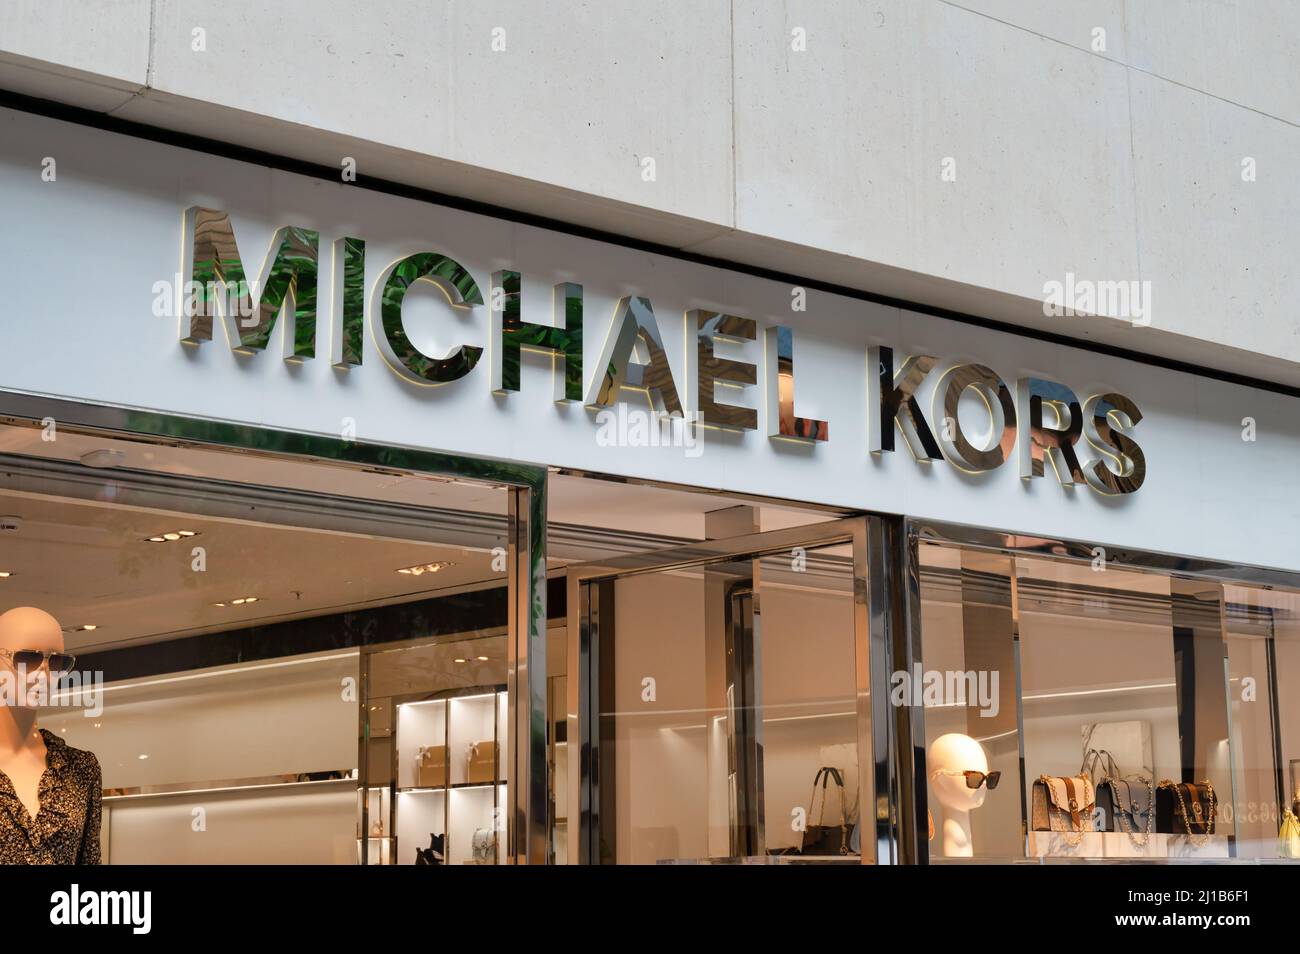 Belfast, UK- Feb 21, 2022:The sign for Michael Kors store in Belfast Northern Ireland. Stock Photo